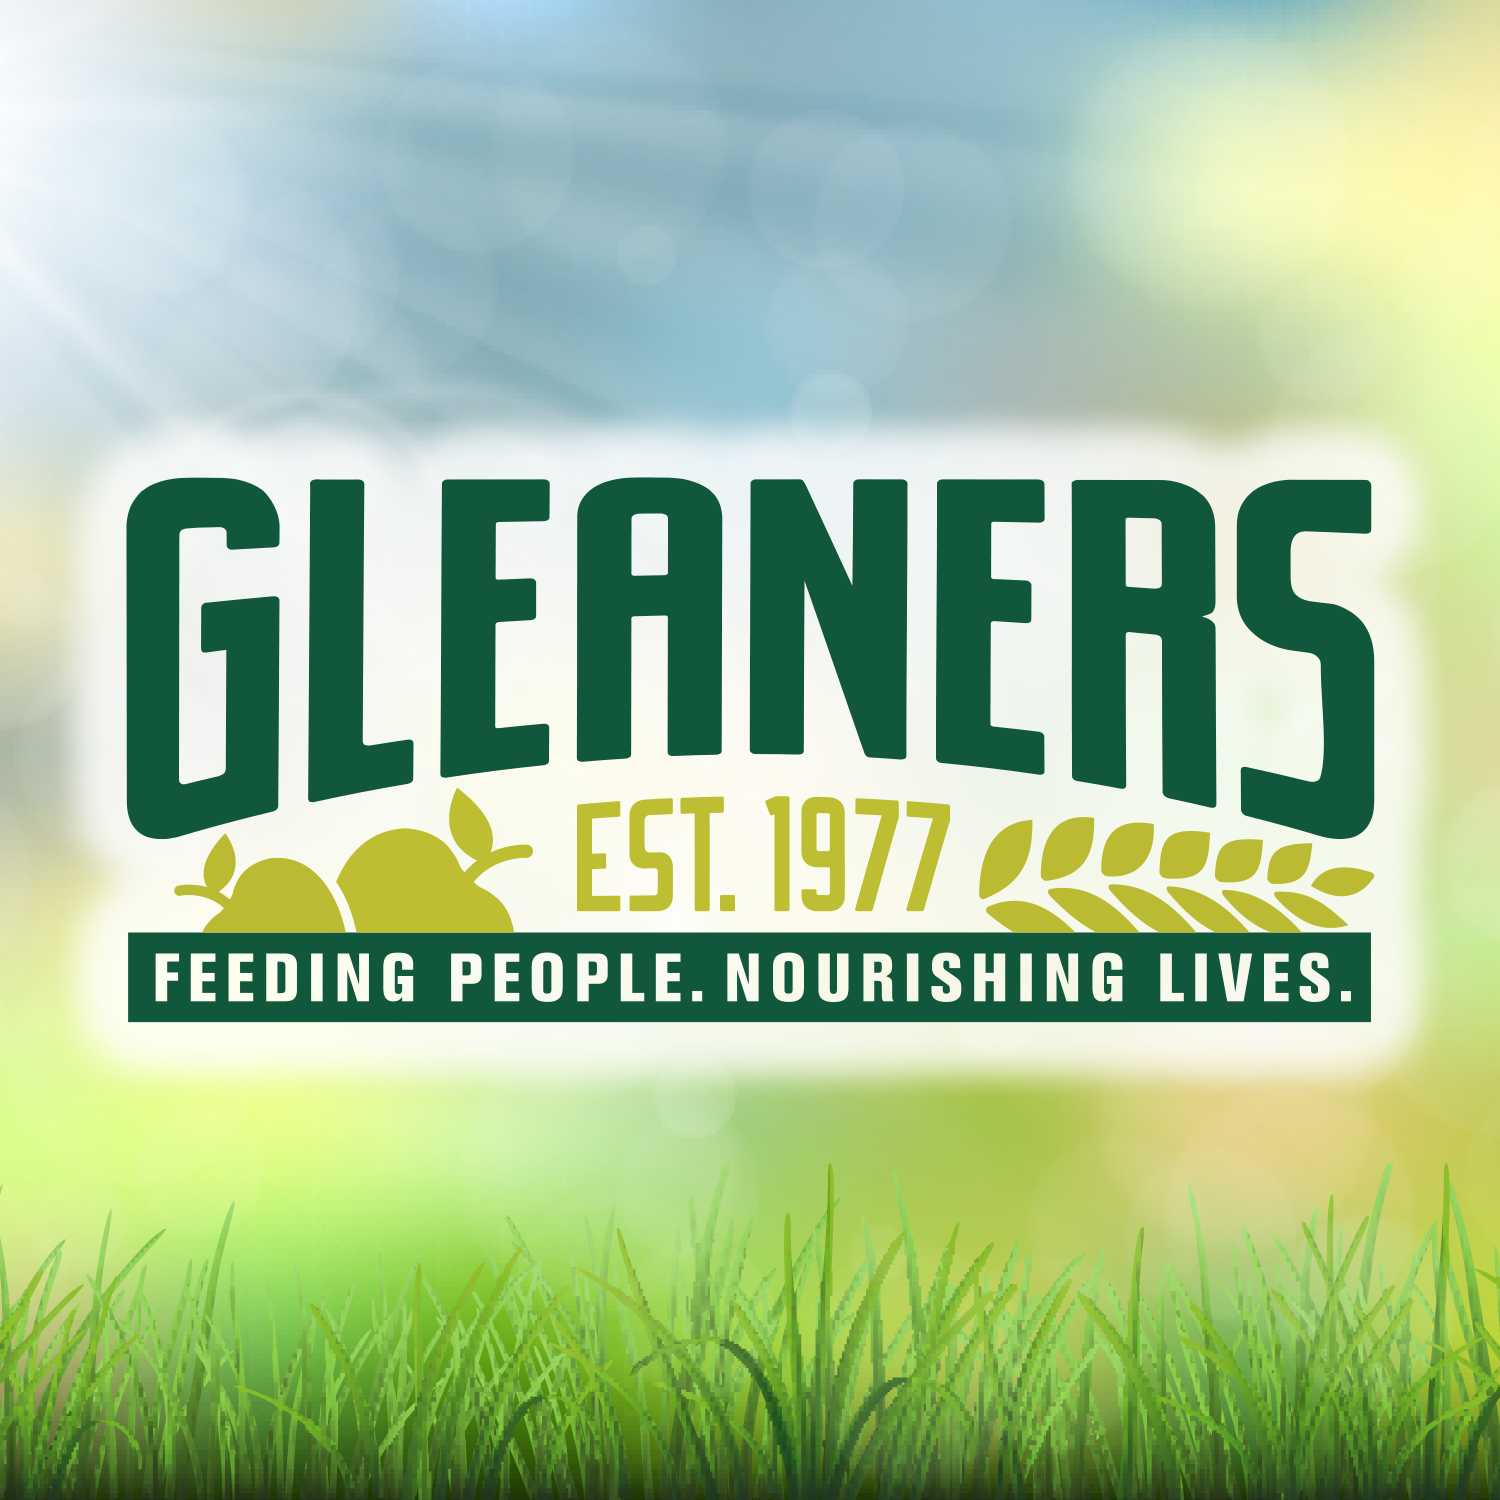 Gleaners Community Food Bank, Inc.